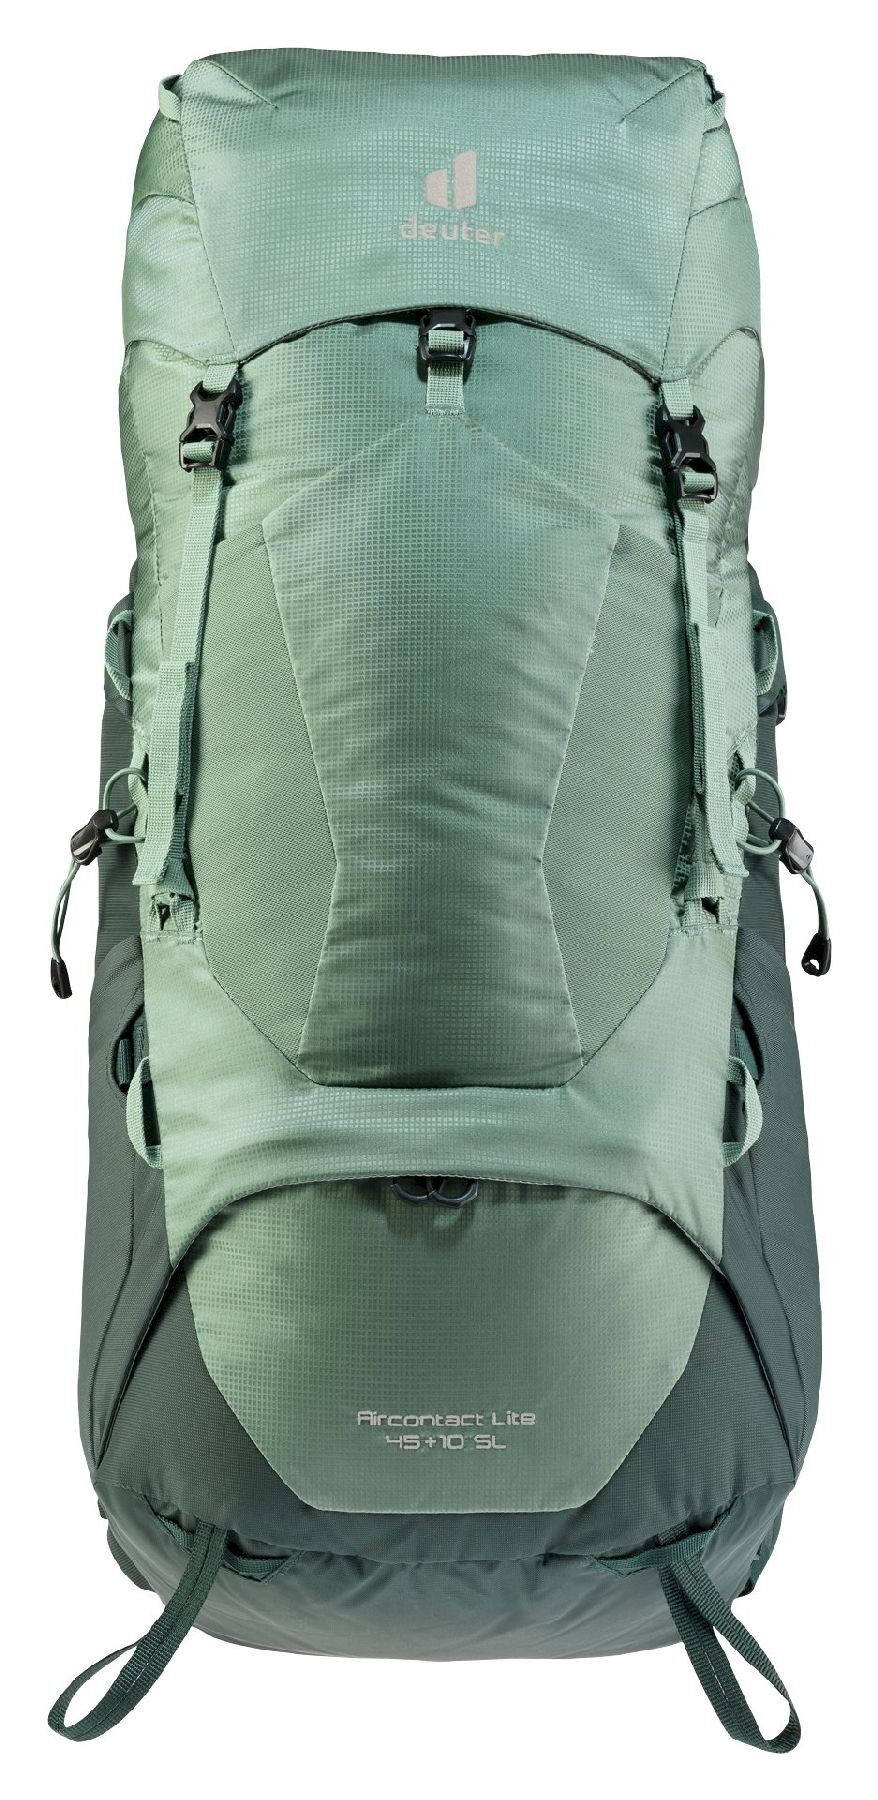 Deuter Aircontact Lite 45 + 10 SL - Walking backpack - Women's